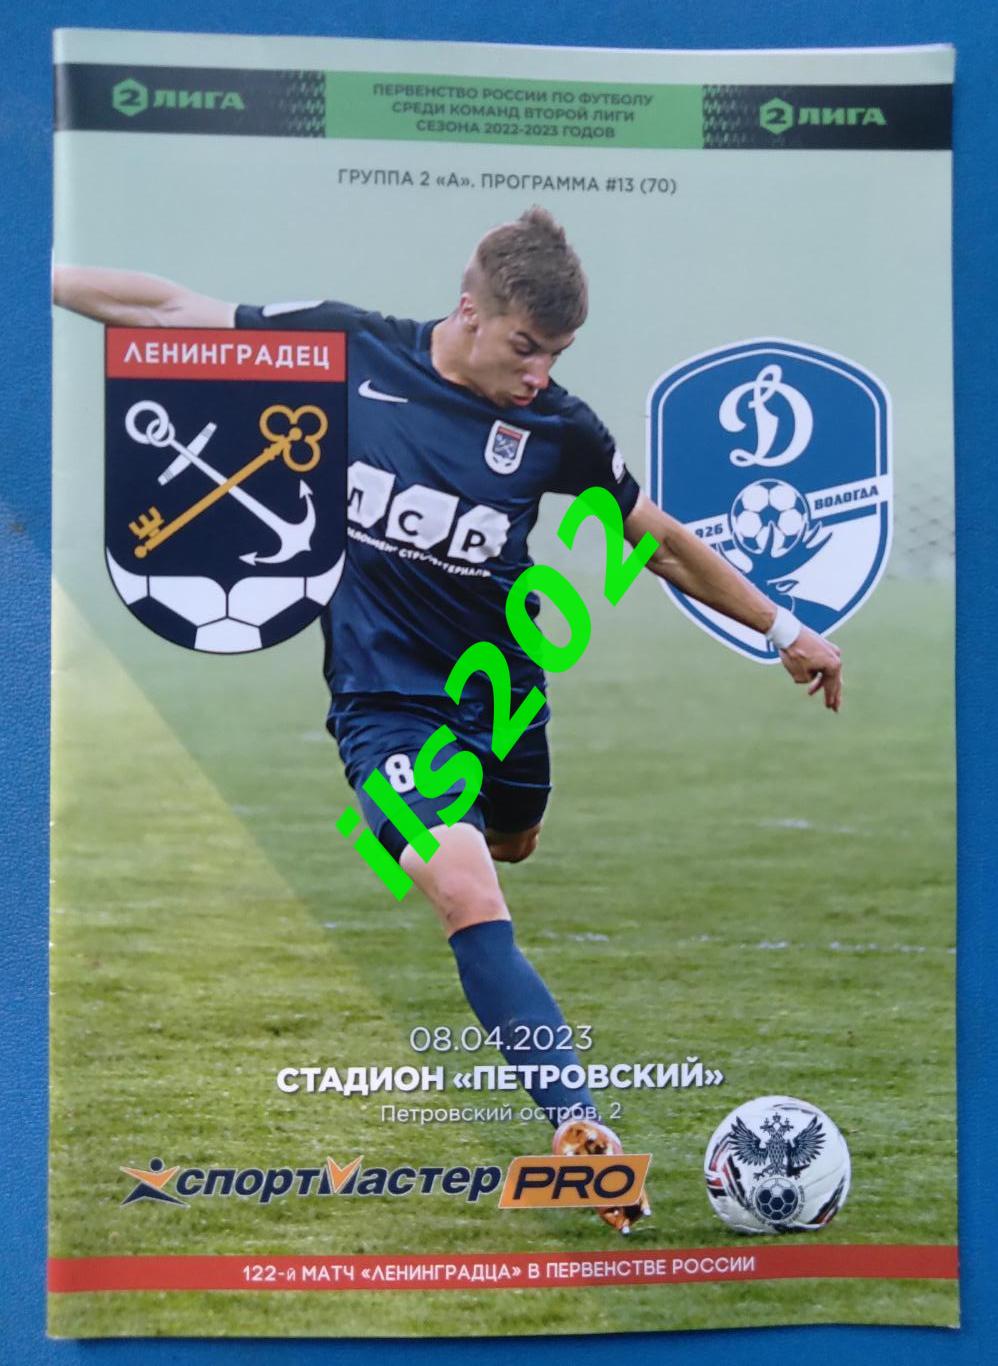 Ленинградец - Динамо Вологда 2022 / 2023